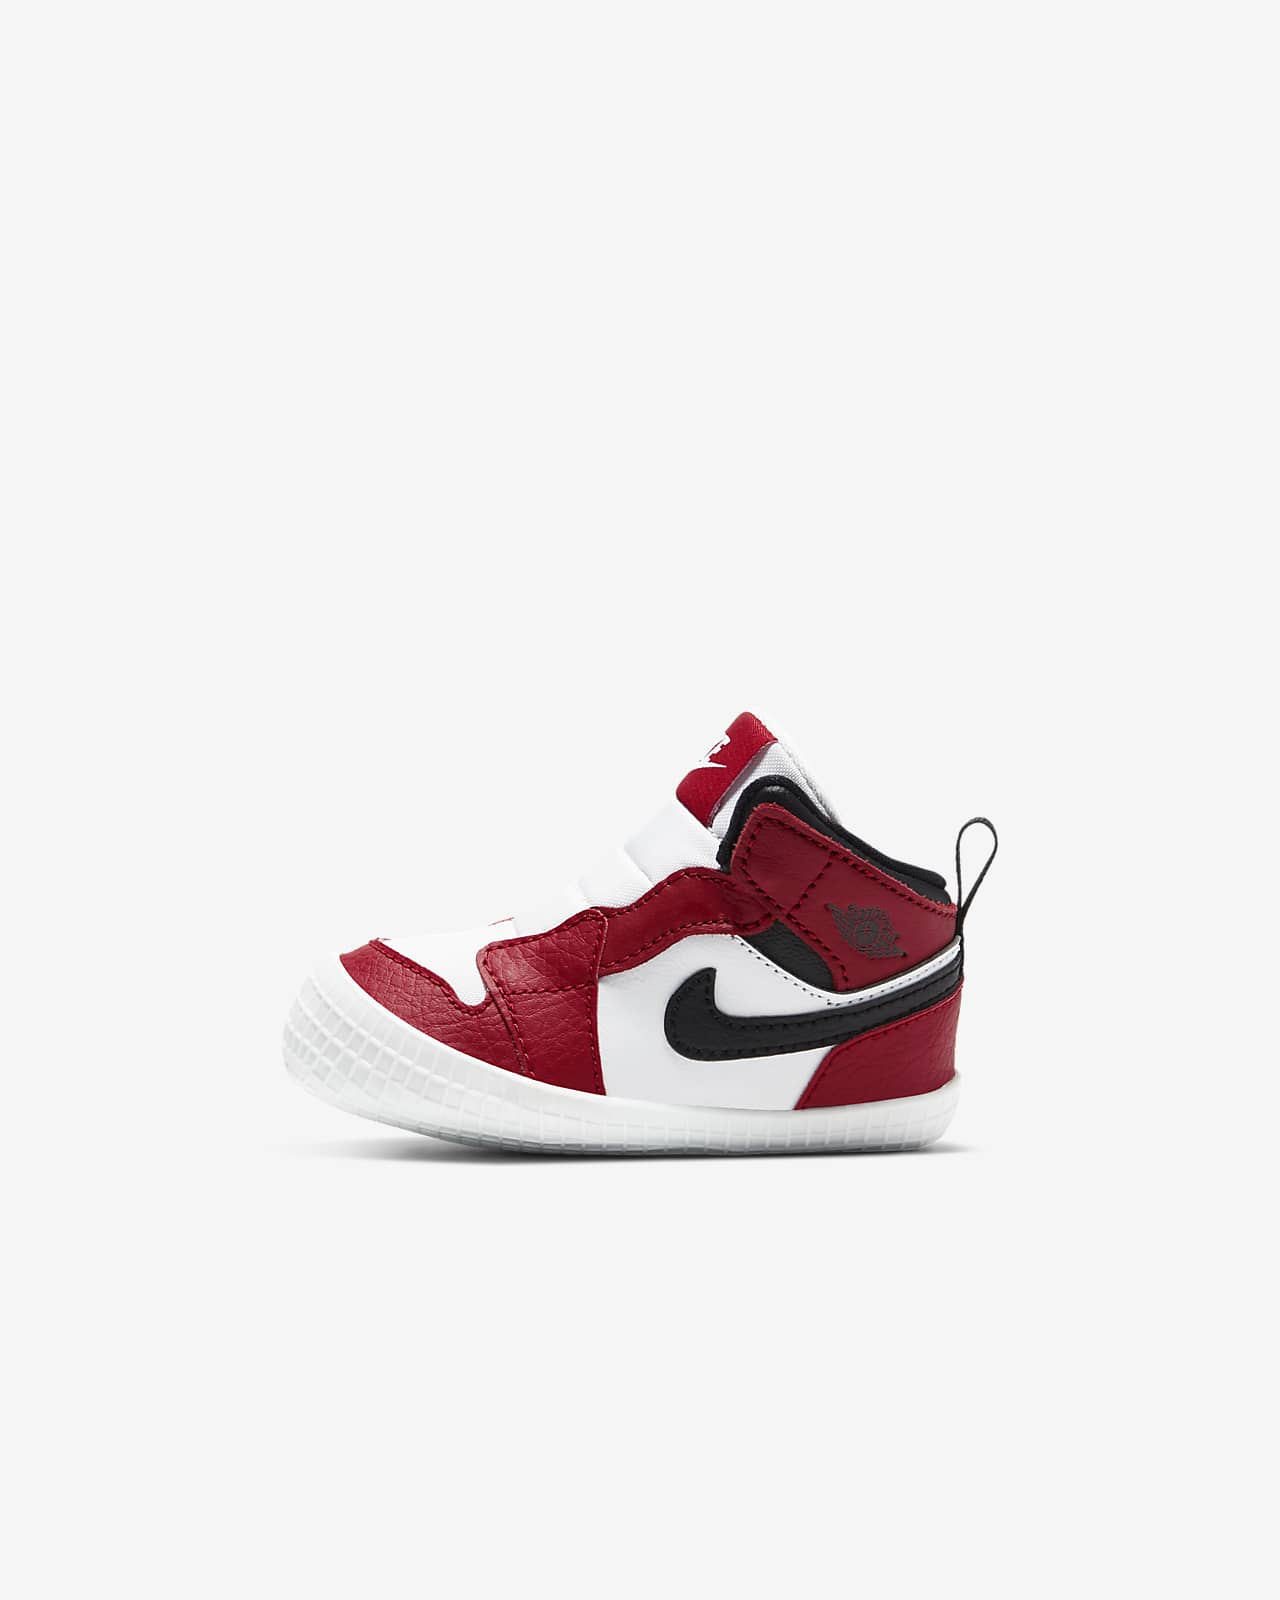 Botín de cuna para bebé Jordan 1. Nike.com